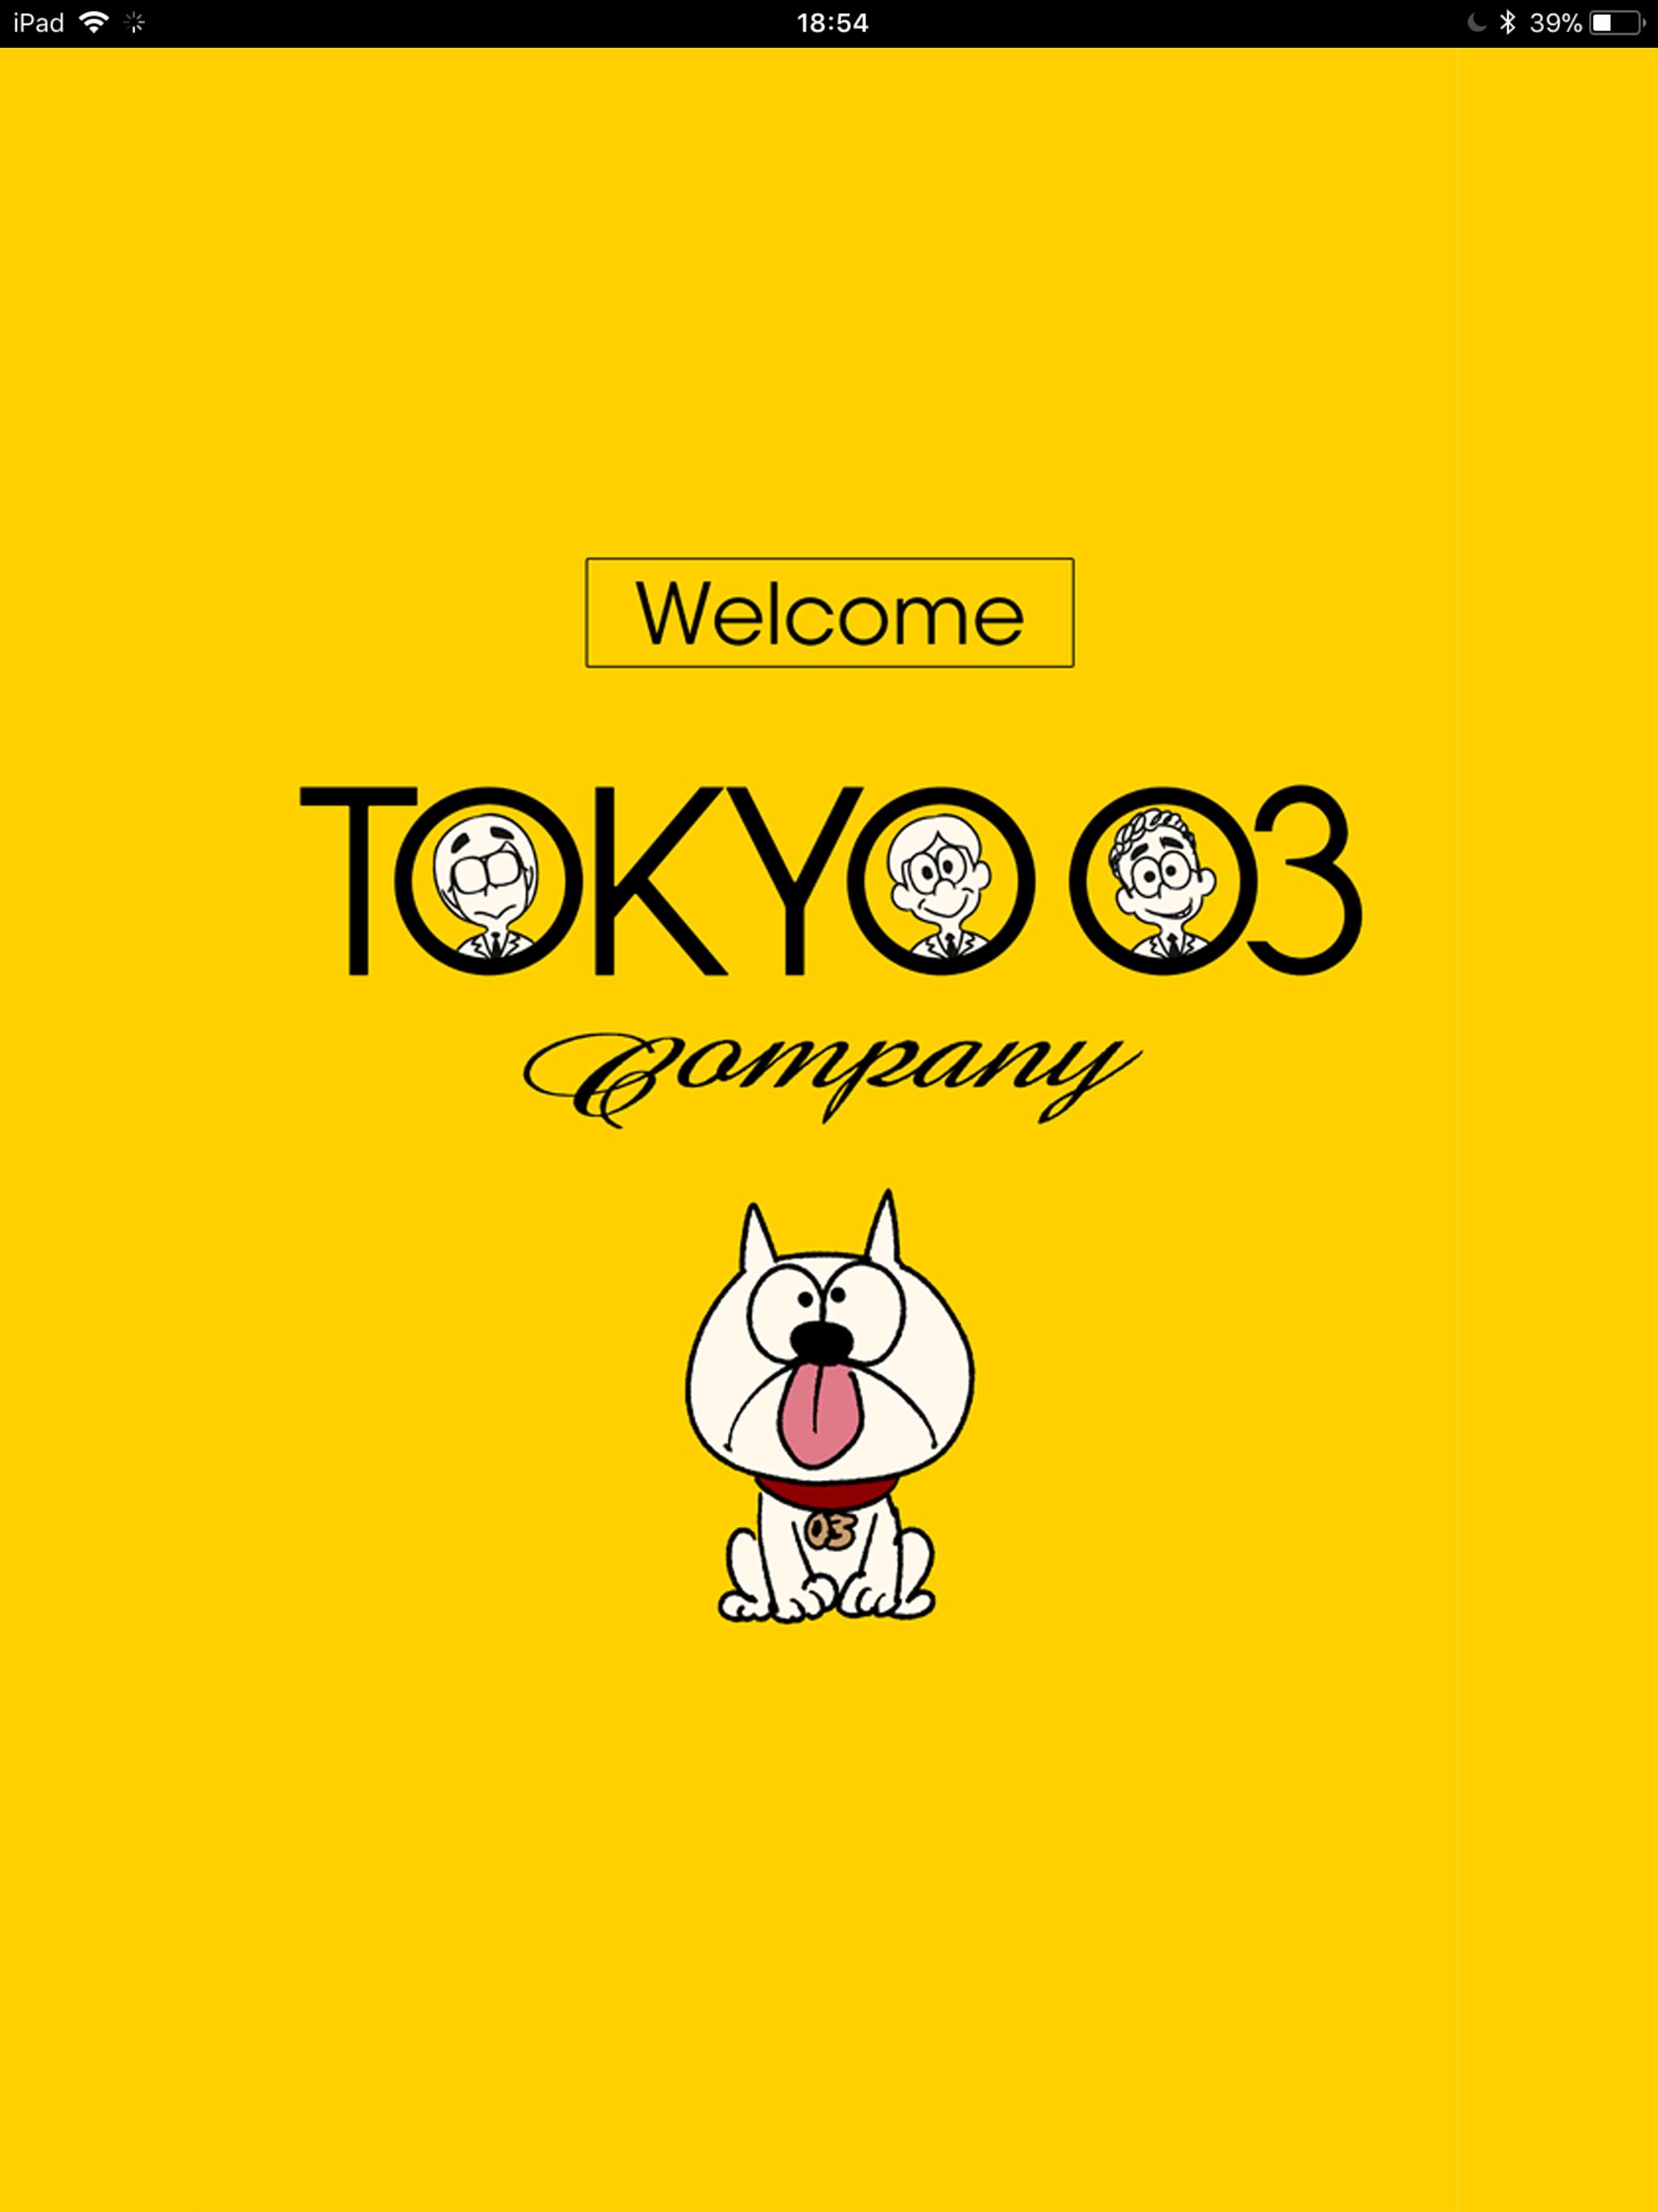 TOKYO 03 Company 3.0.30 Screenshot 6